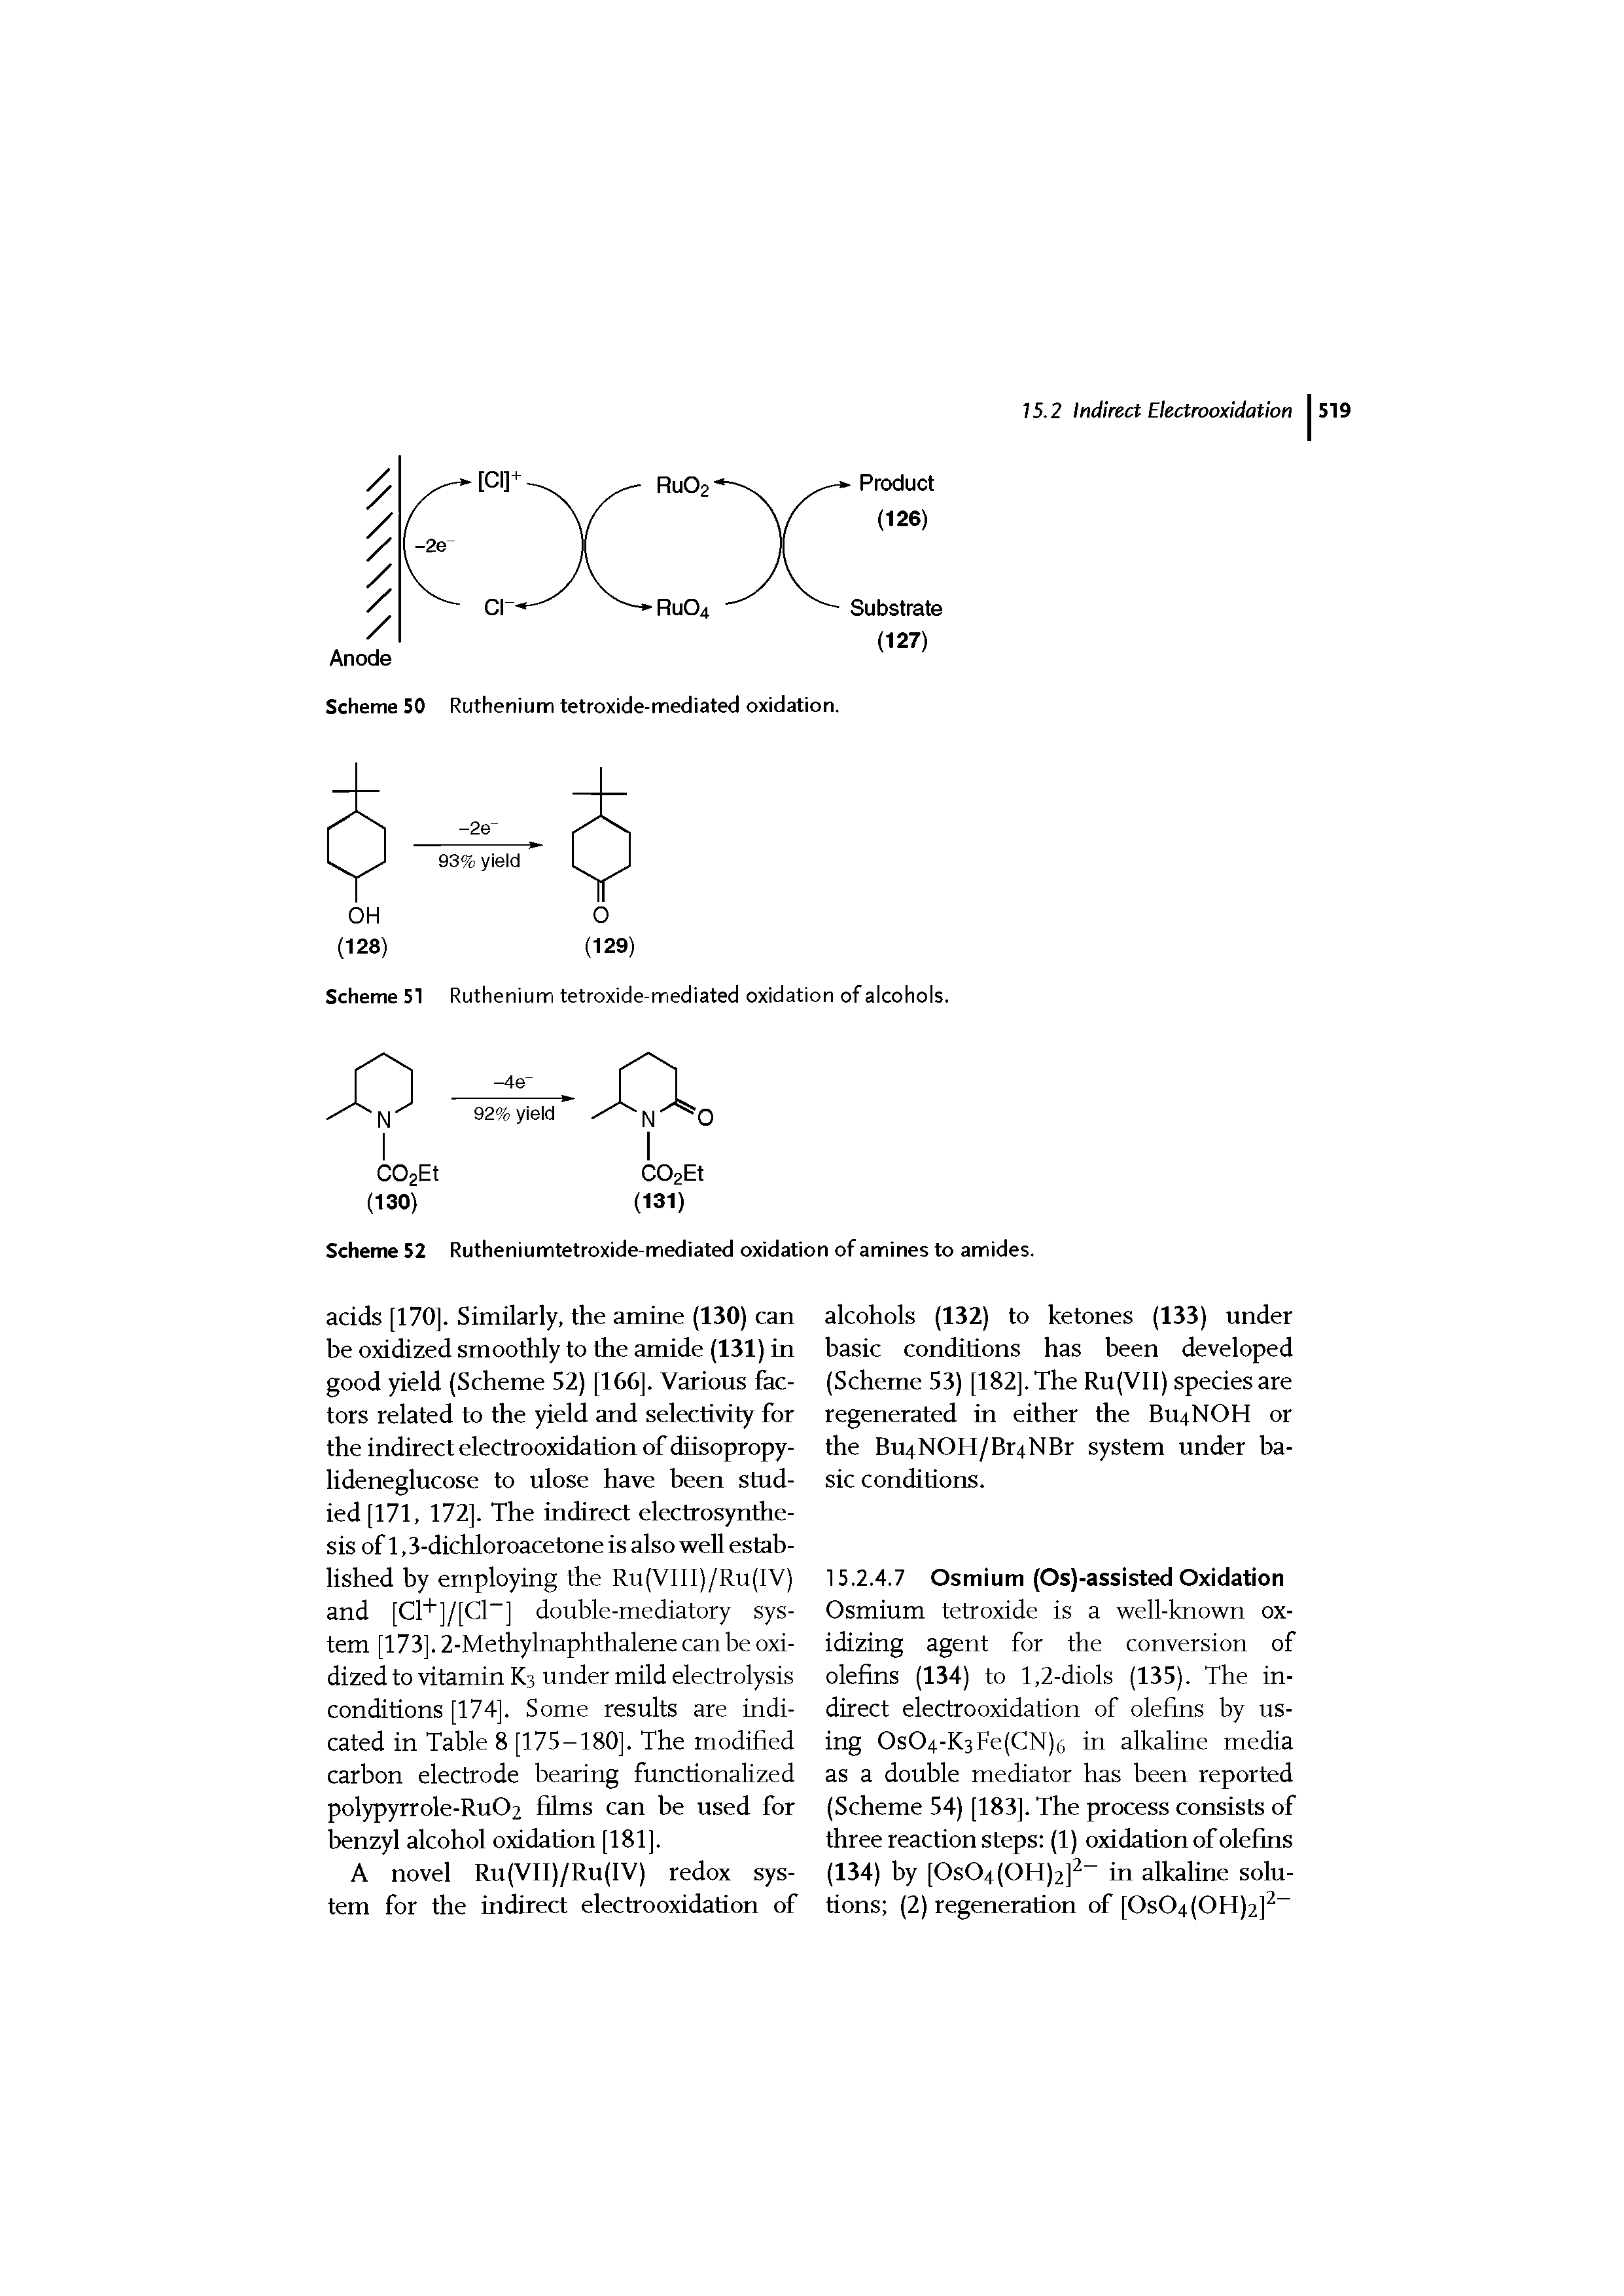 Scheme 51 Ruthenium tetroxide-mediated oxidation of alcohols.